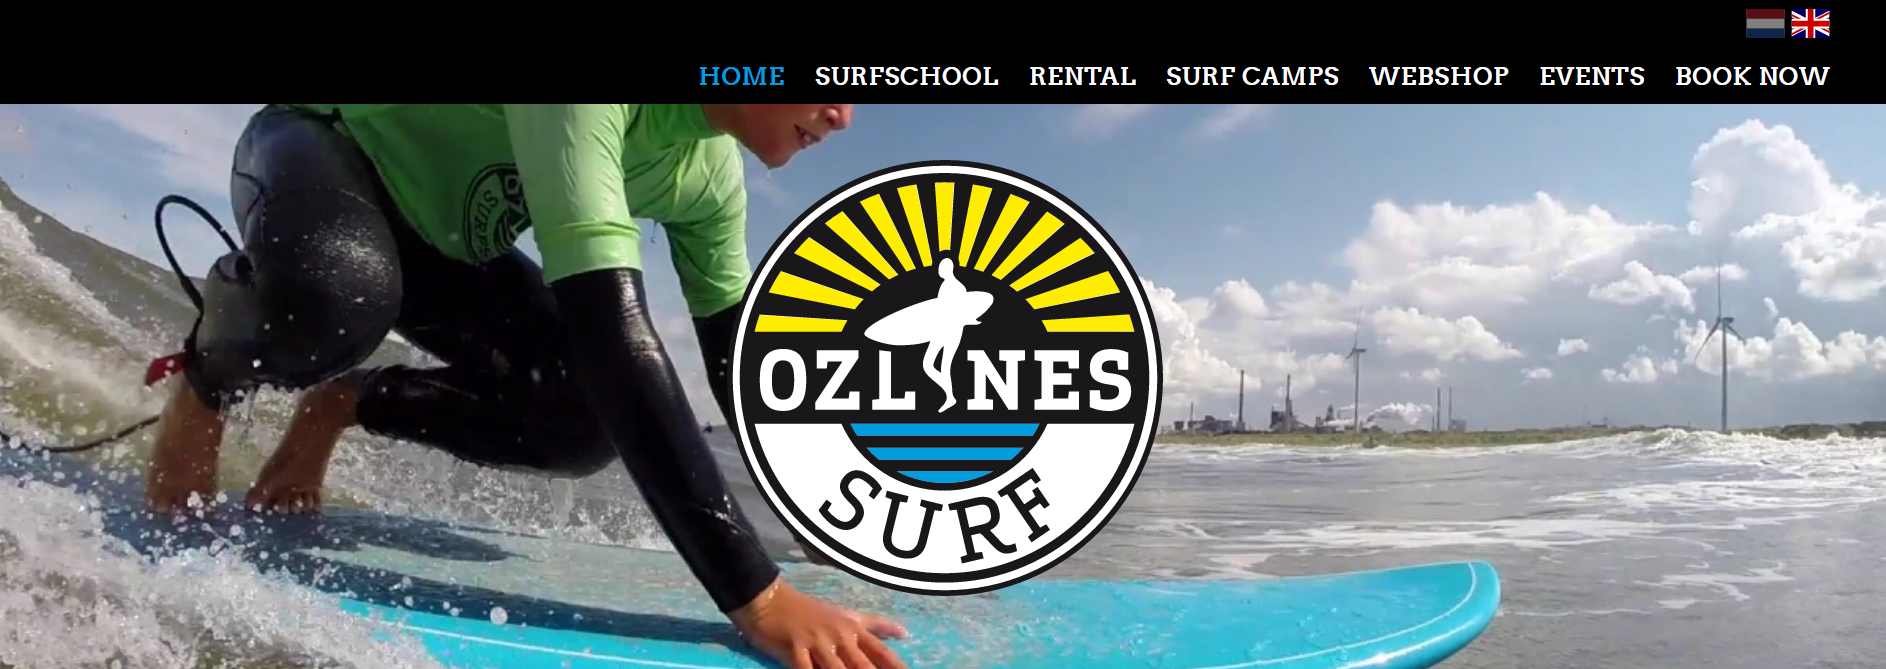 ozlines surf